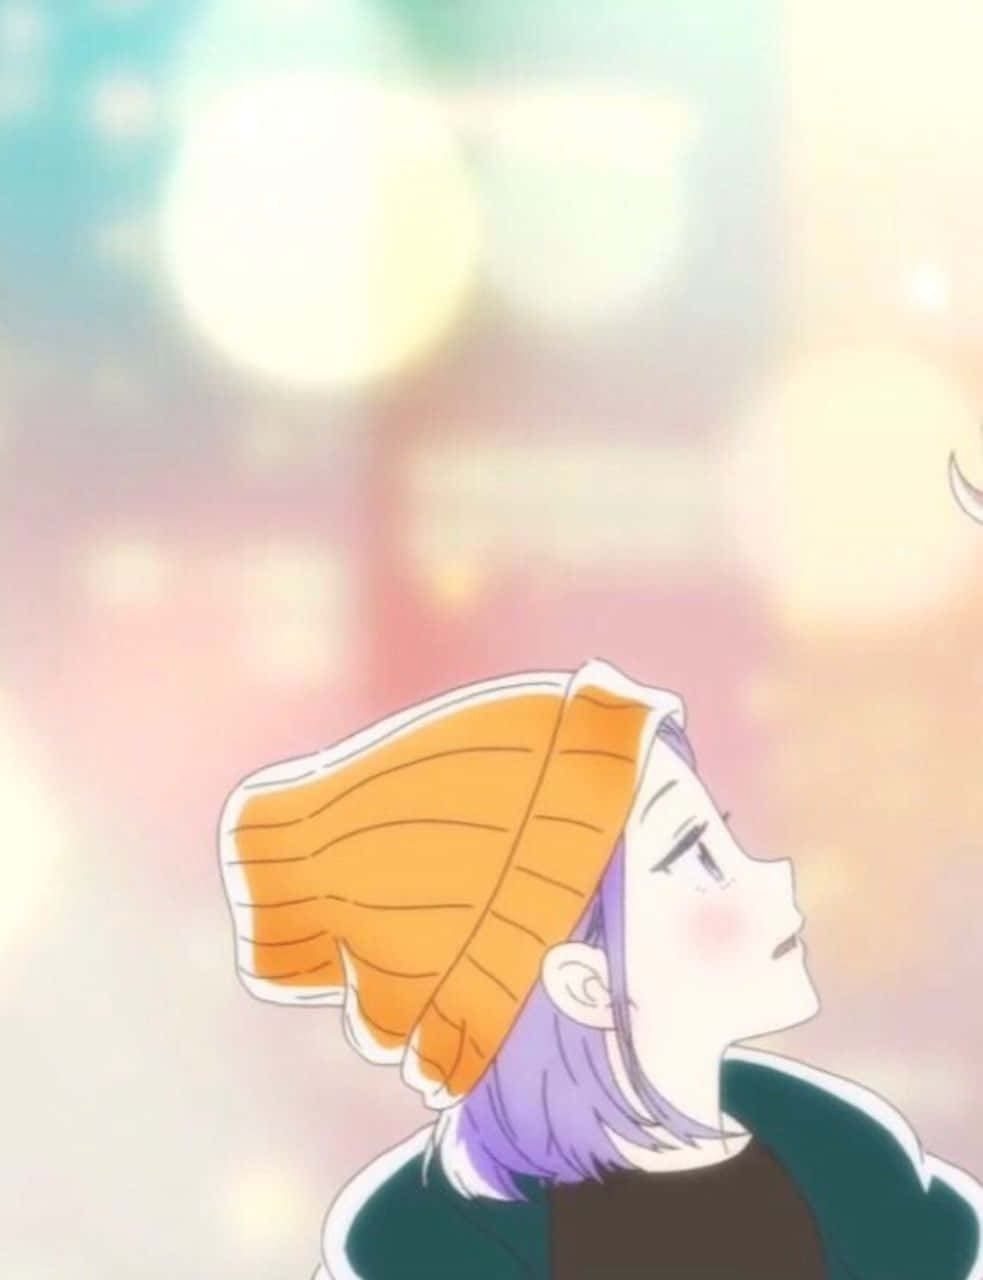 A heartwarming embrace between a lovable anime couple